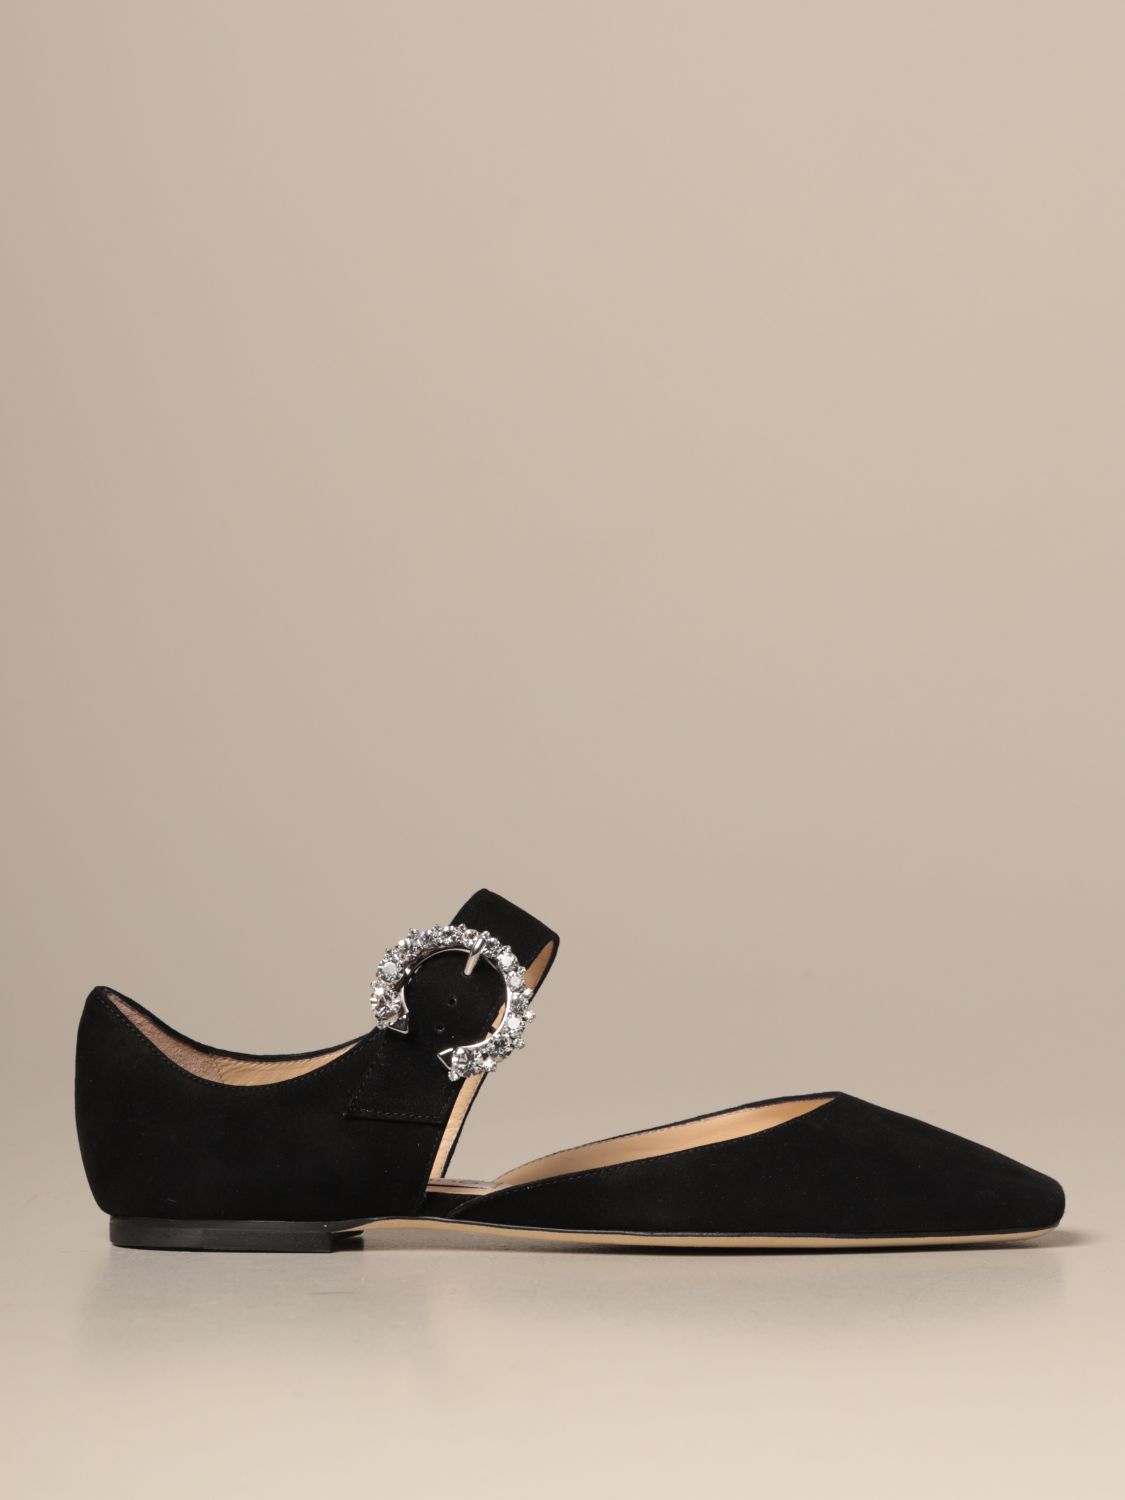 suede ballerina shoes